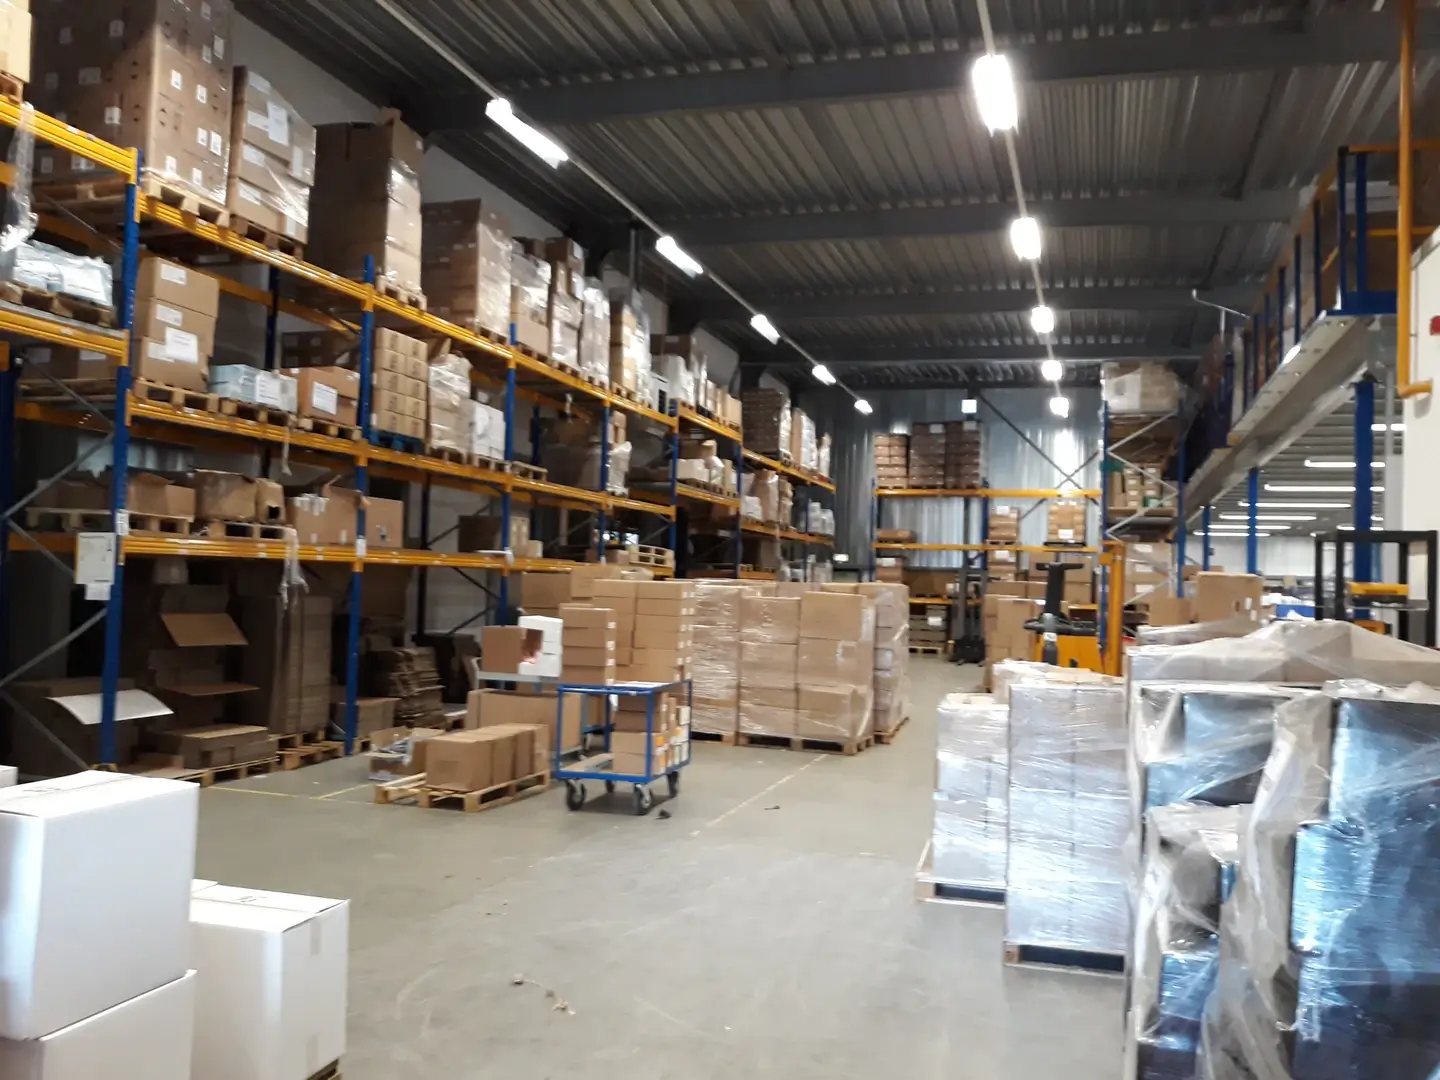 AenD warehouse